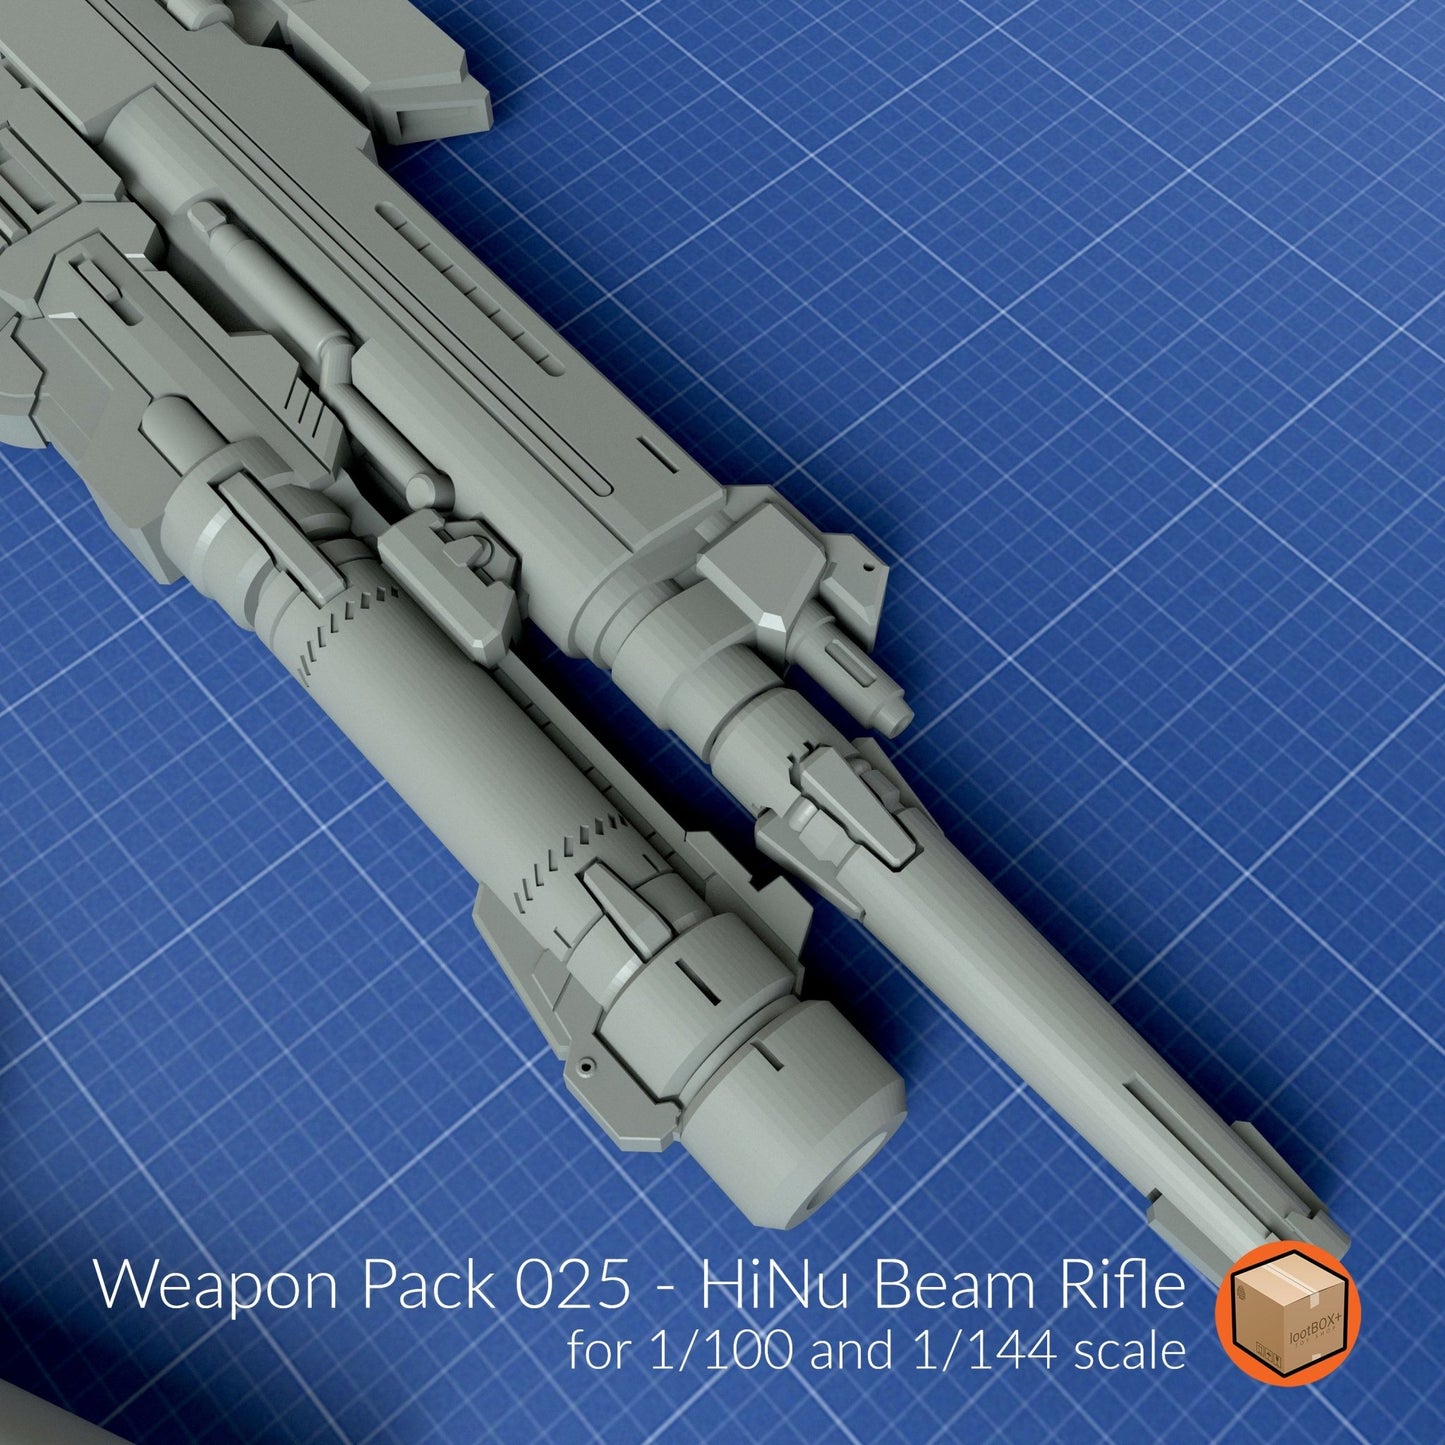 WP025 - Hi-NU Beam Rifle - Trisagion Models